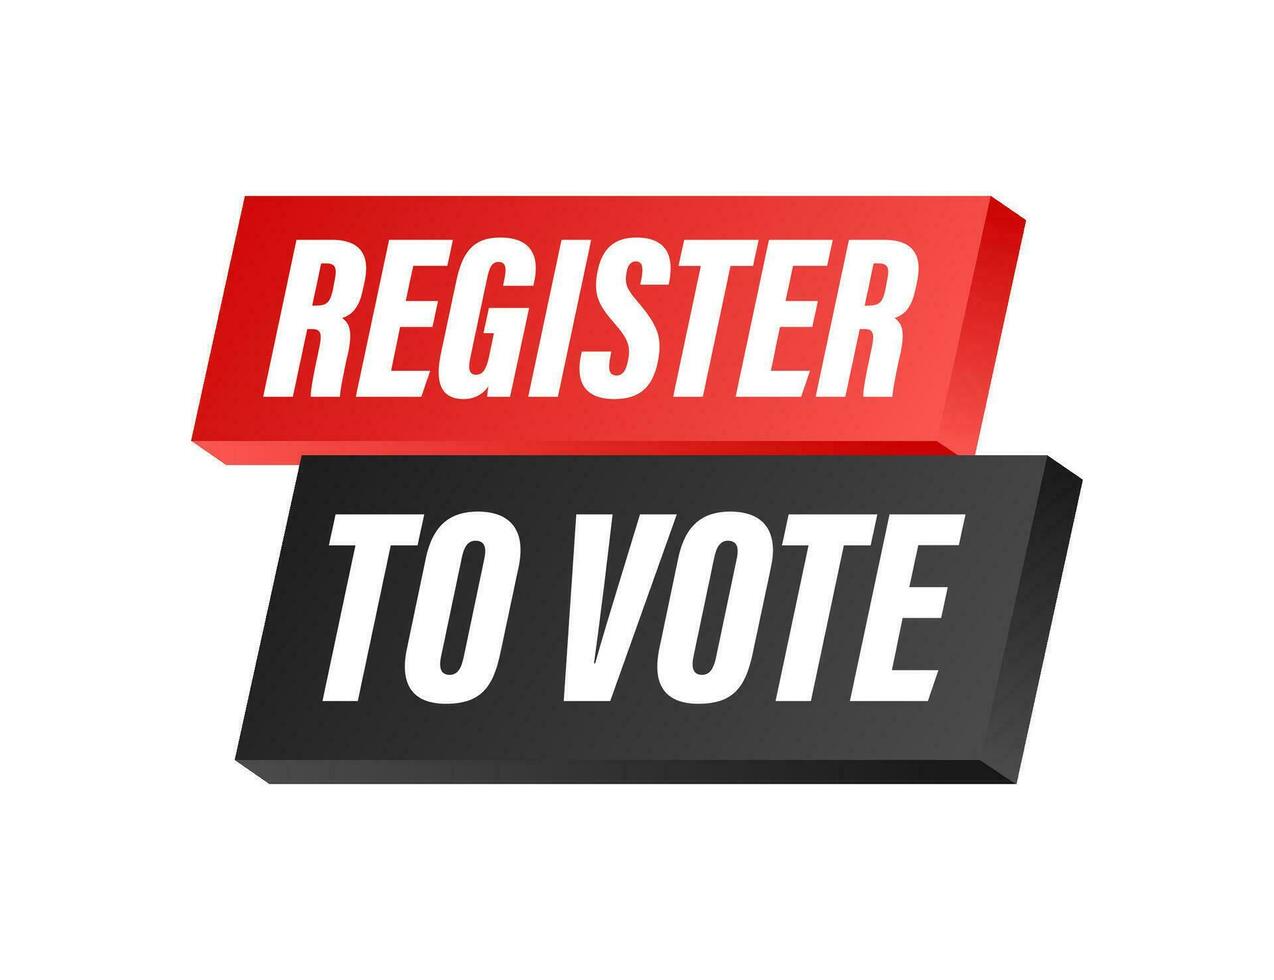 Register to vote written on blue label. Advertising sign. Vector stock illustration